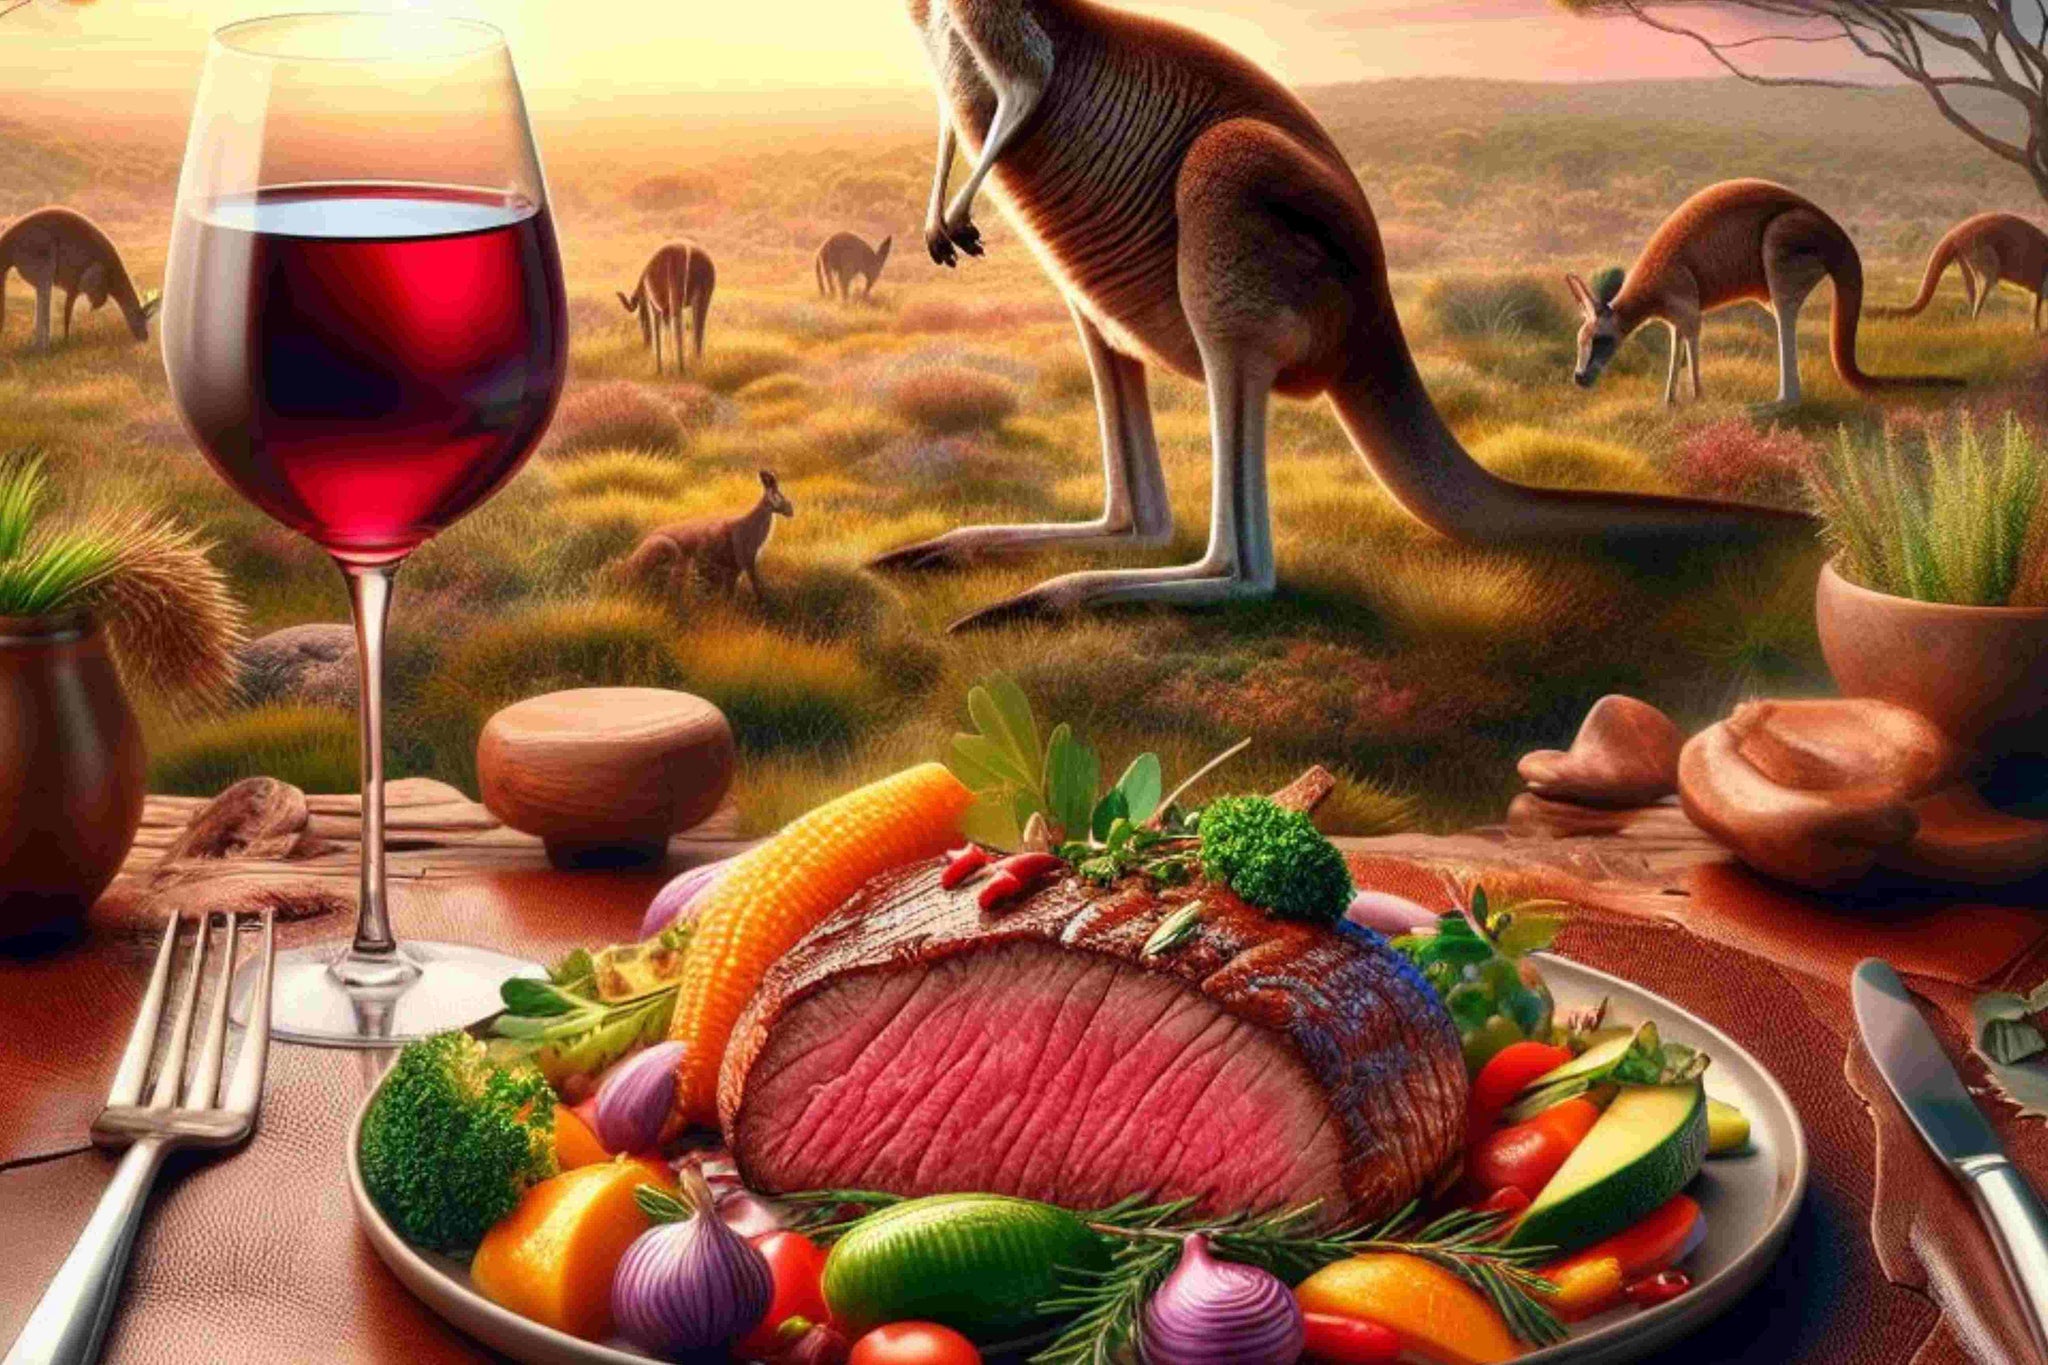 Manly Munching: Exploring Kangaroo Cuisine for Aussie Men